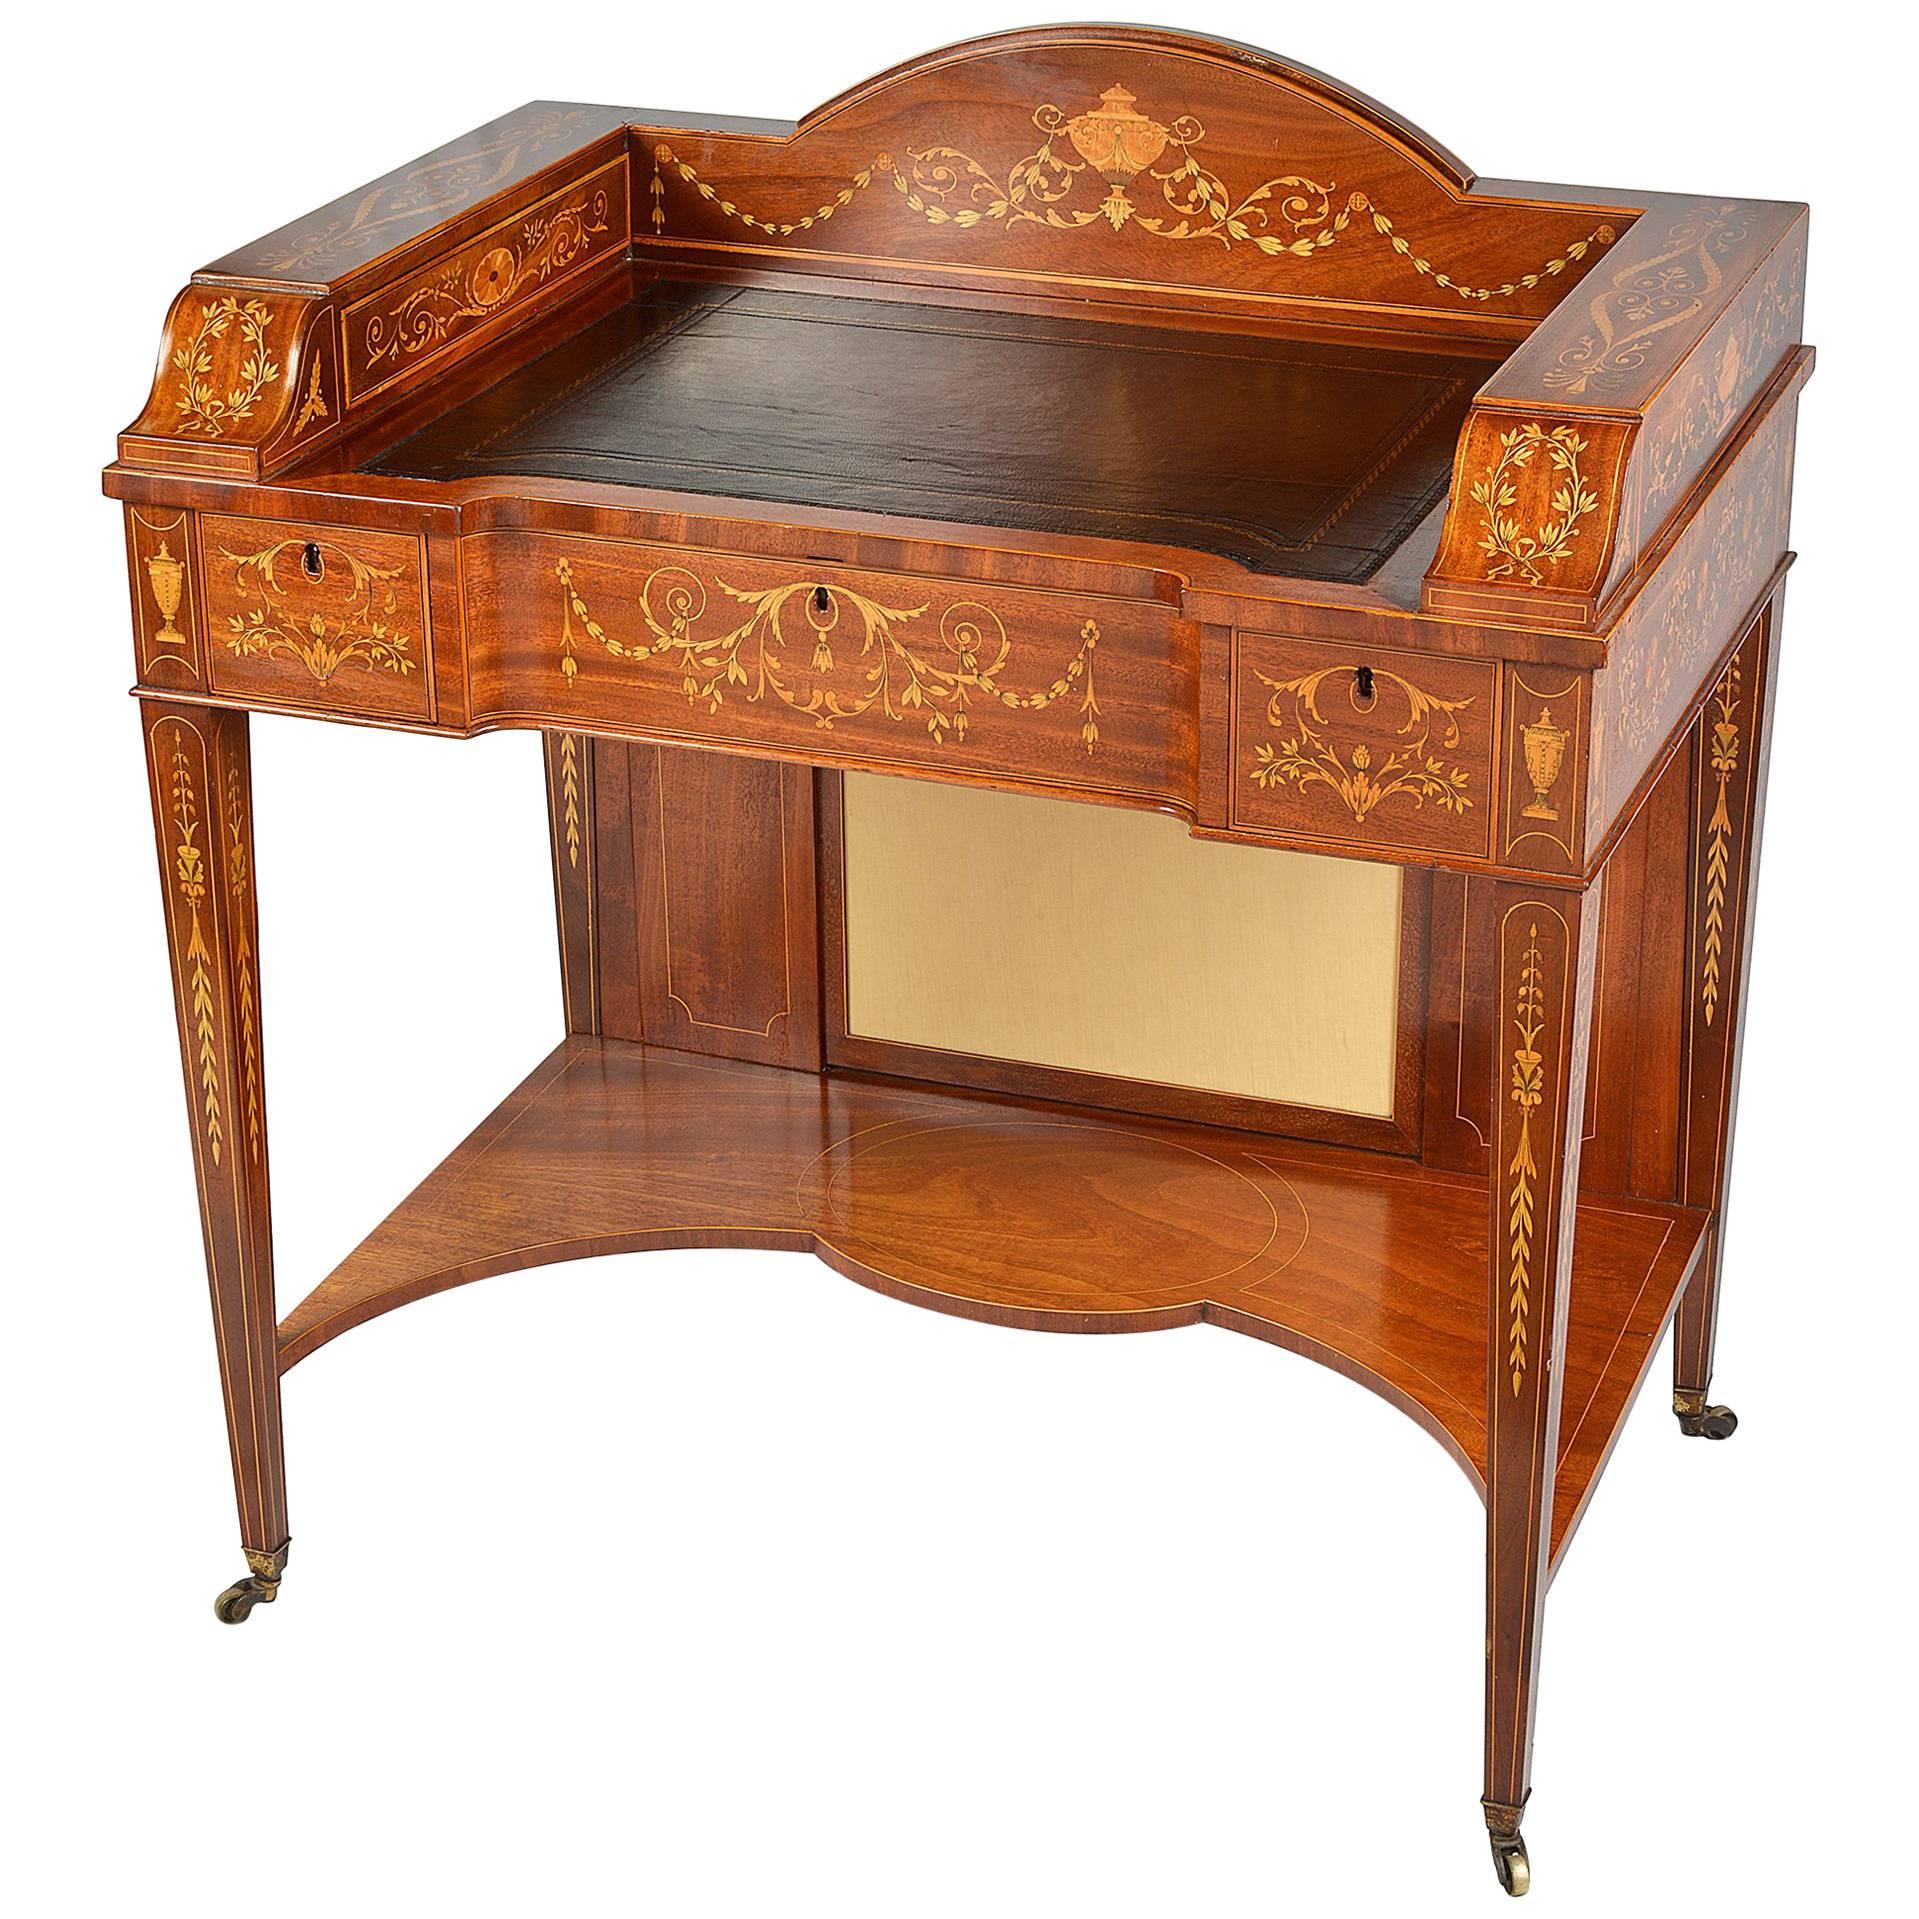 19th Century Sheraton Revival Inlaid Desk